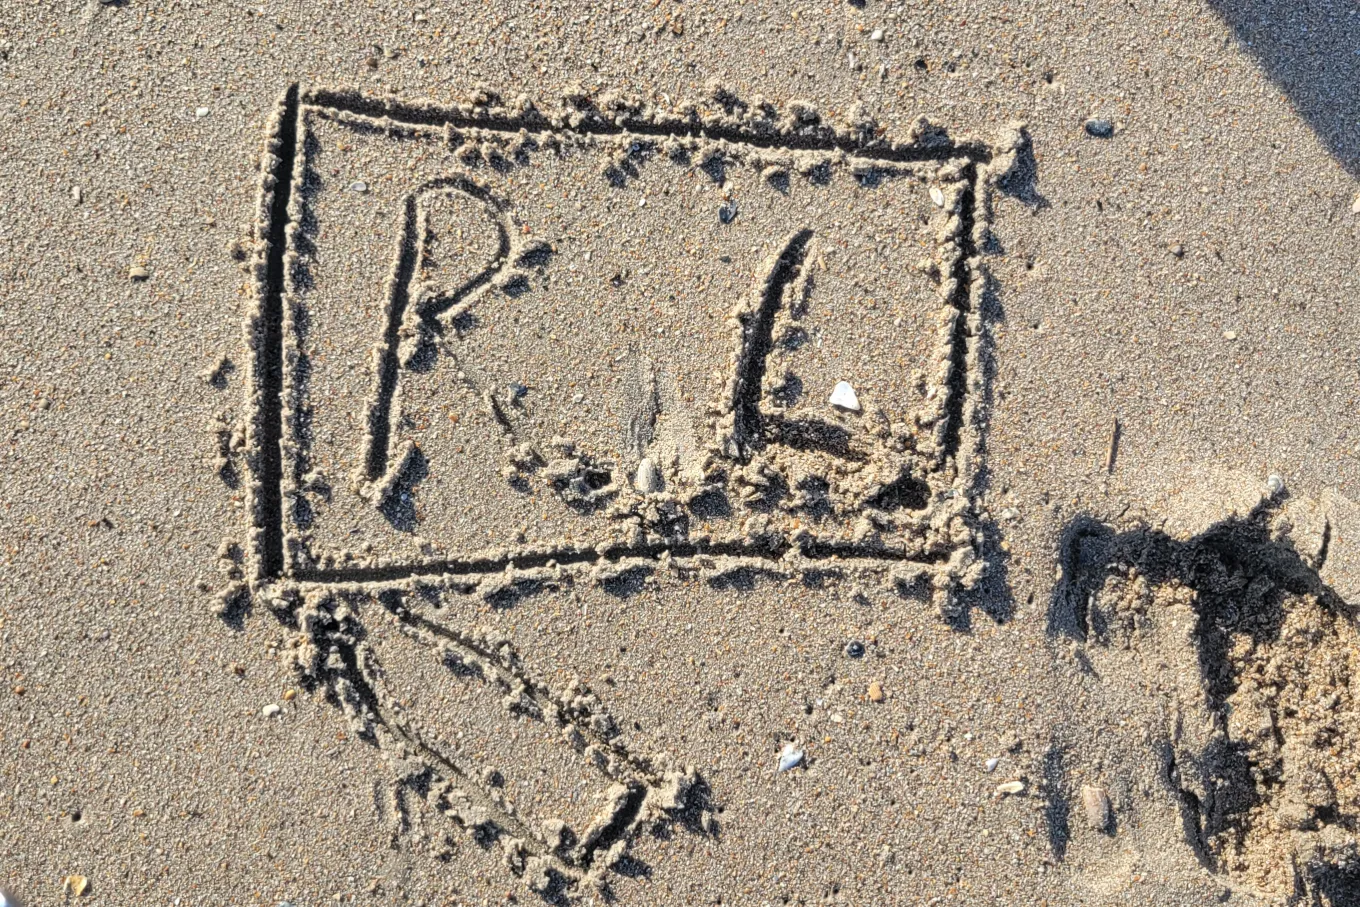 Richland Library logo drawn in sand